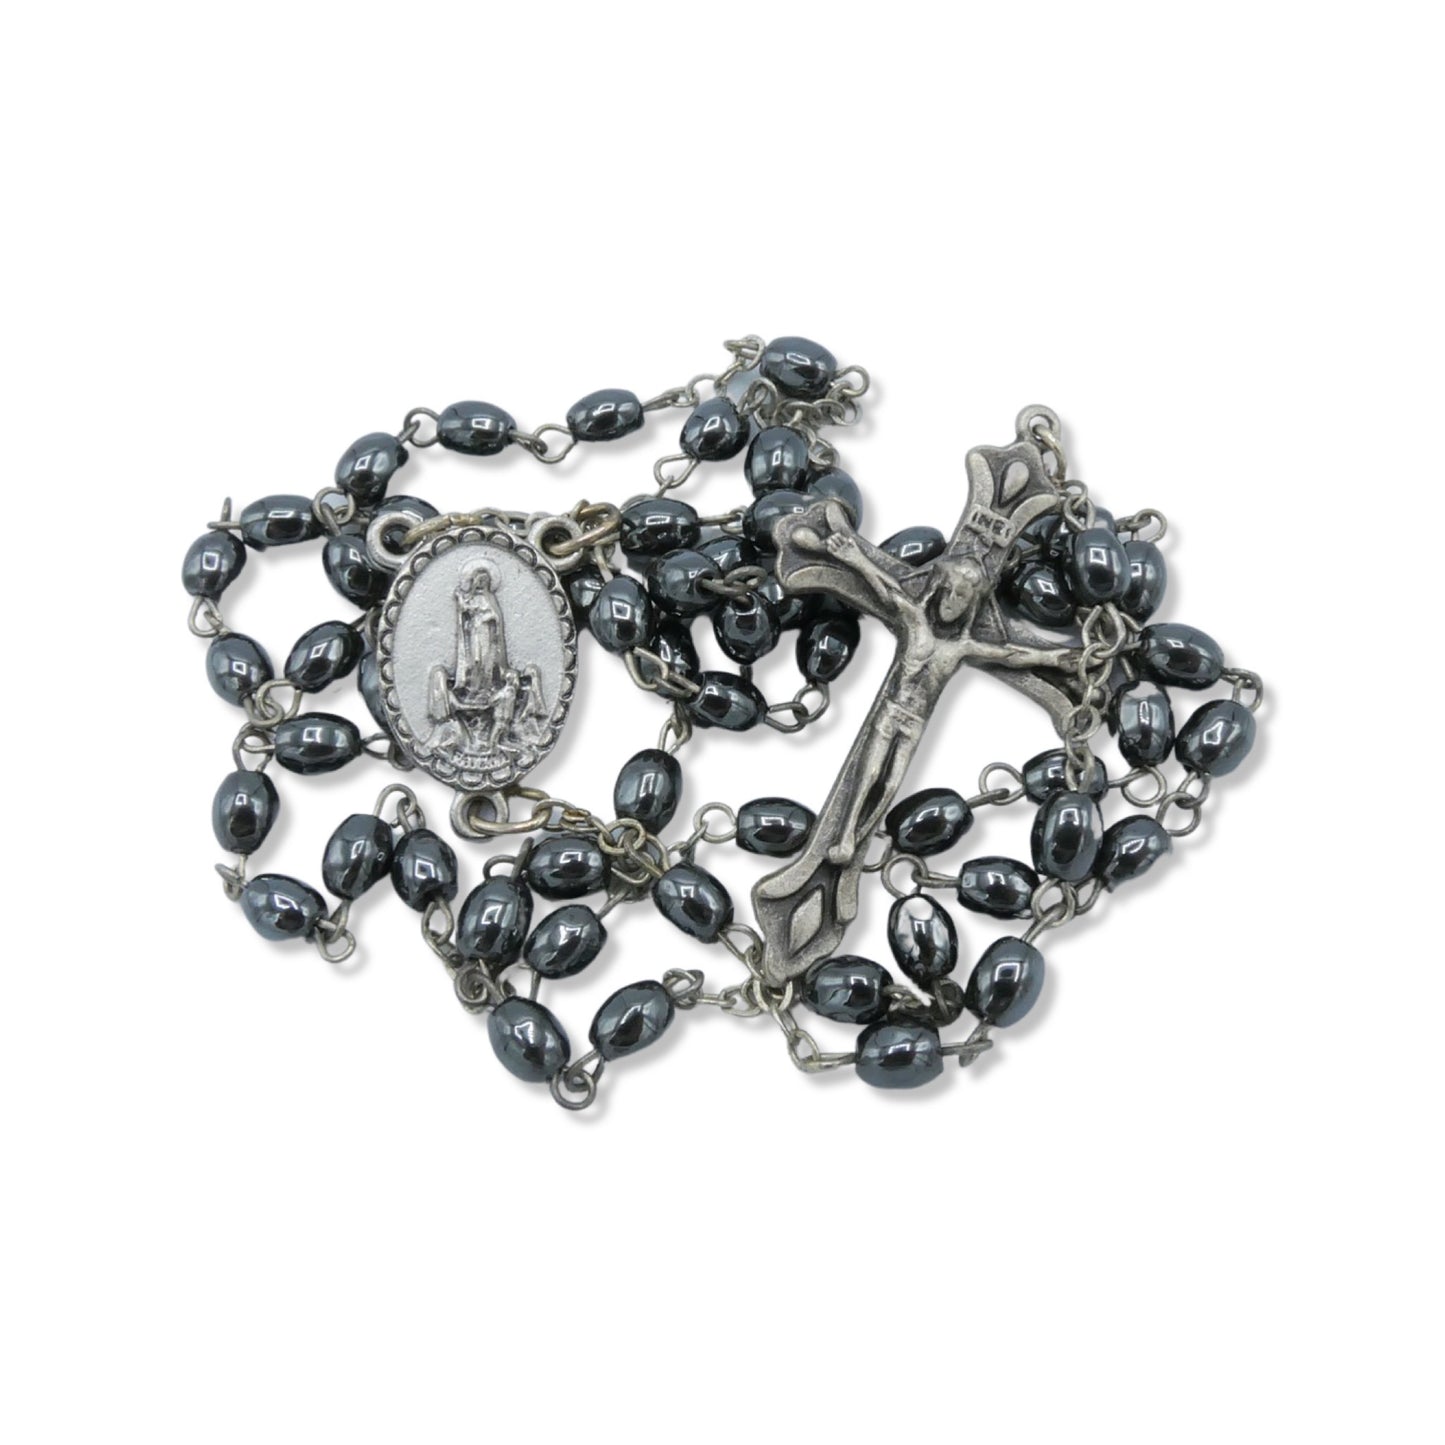 Metallic Fatima Rosary with Soil